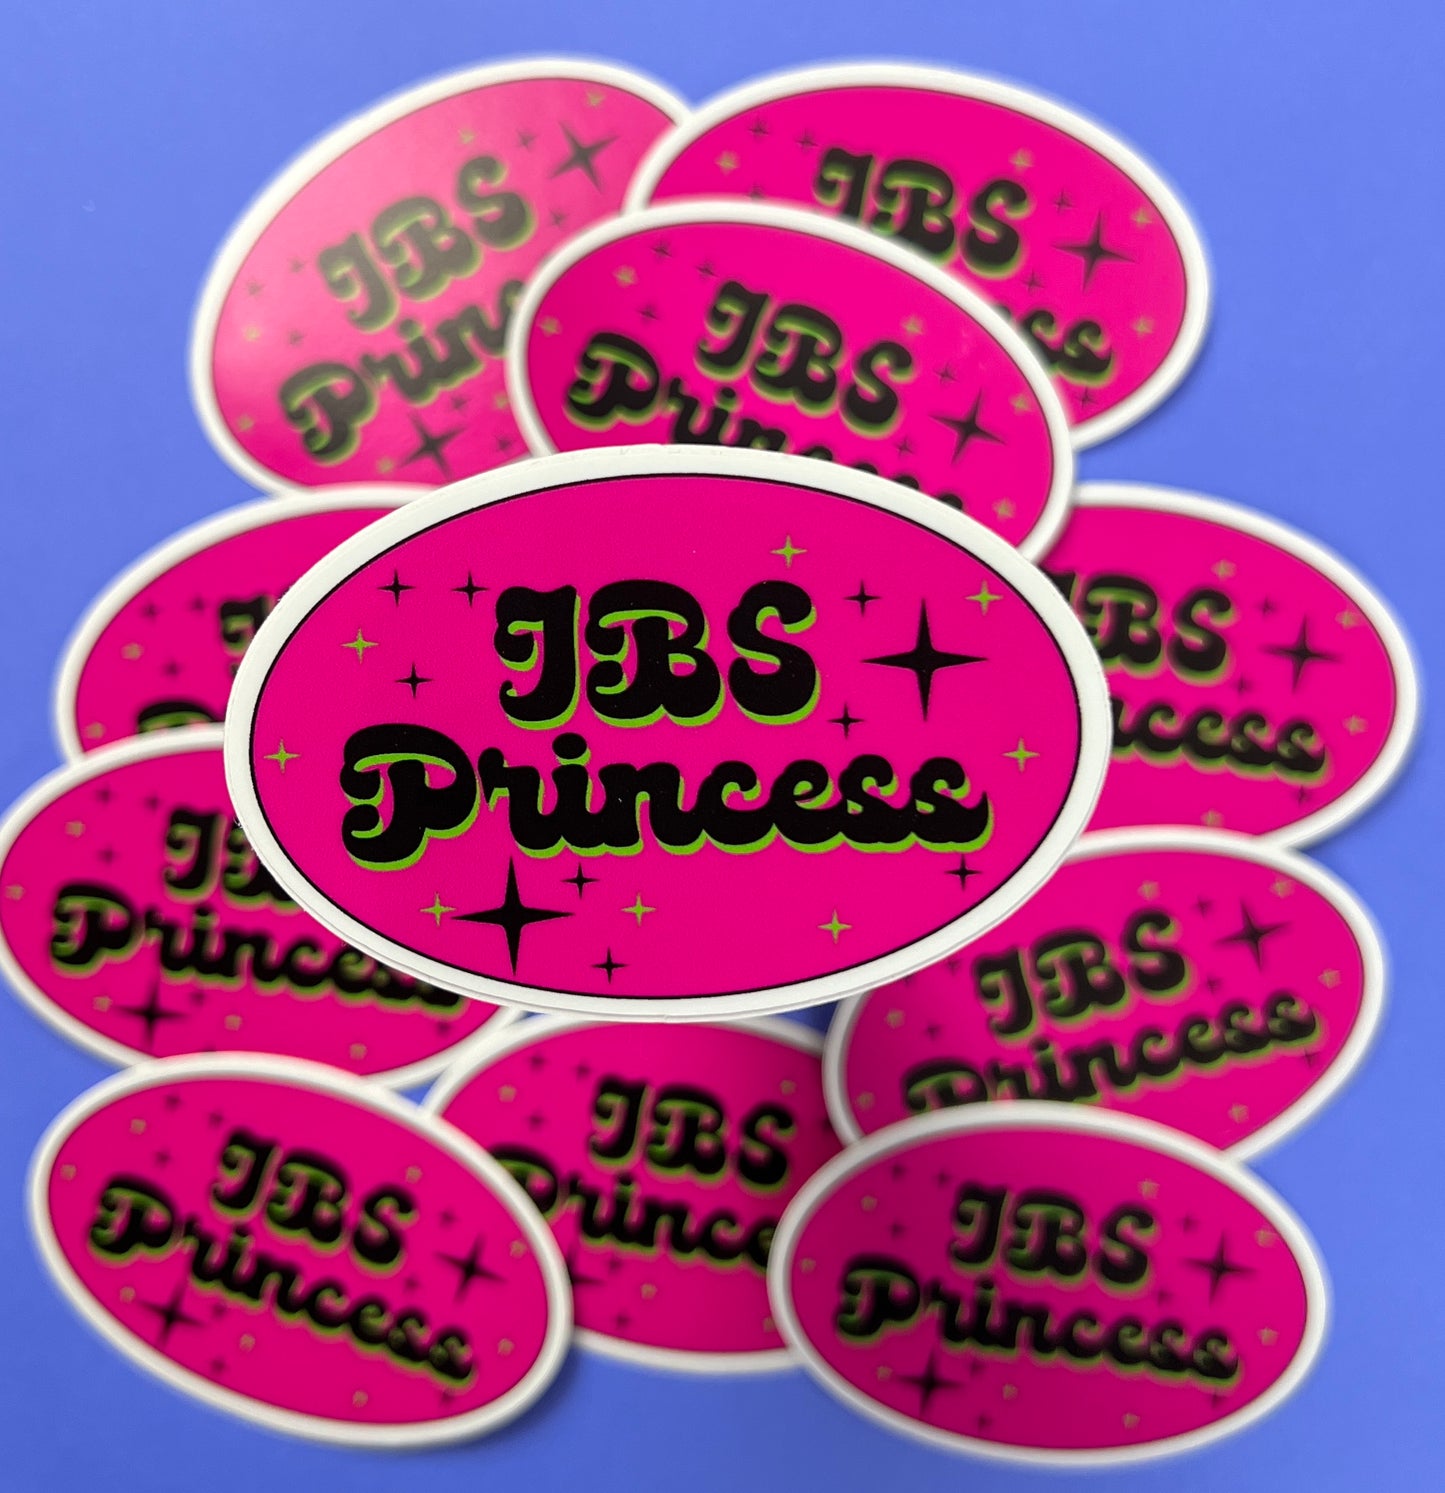 IBS Princess